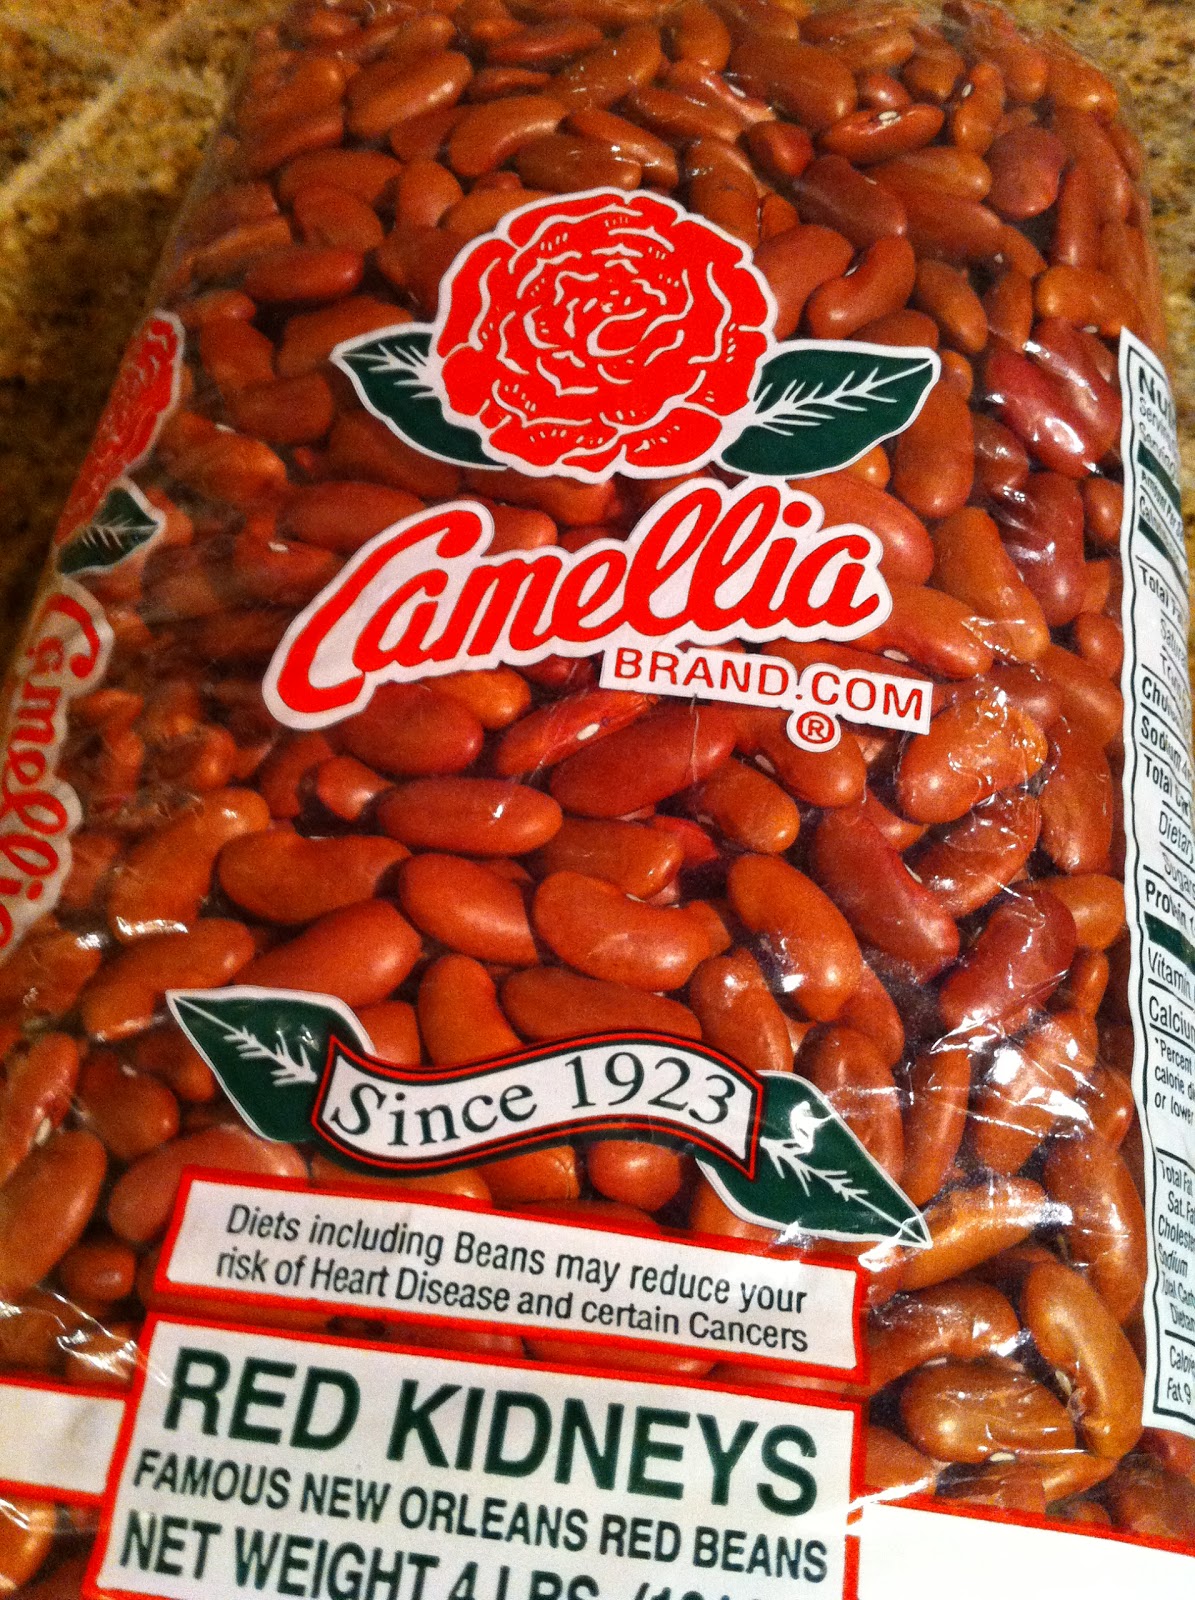 http://4.bp.blogspot.com/_X-AQvIgUjMc/TKo8LFJDohI/AAAAAAAAA-w/nLjTtsh08F8/s1600/Camellia+red+beans.JPG